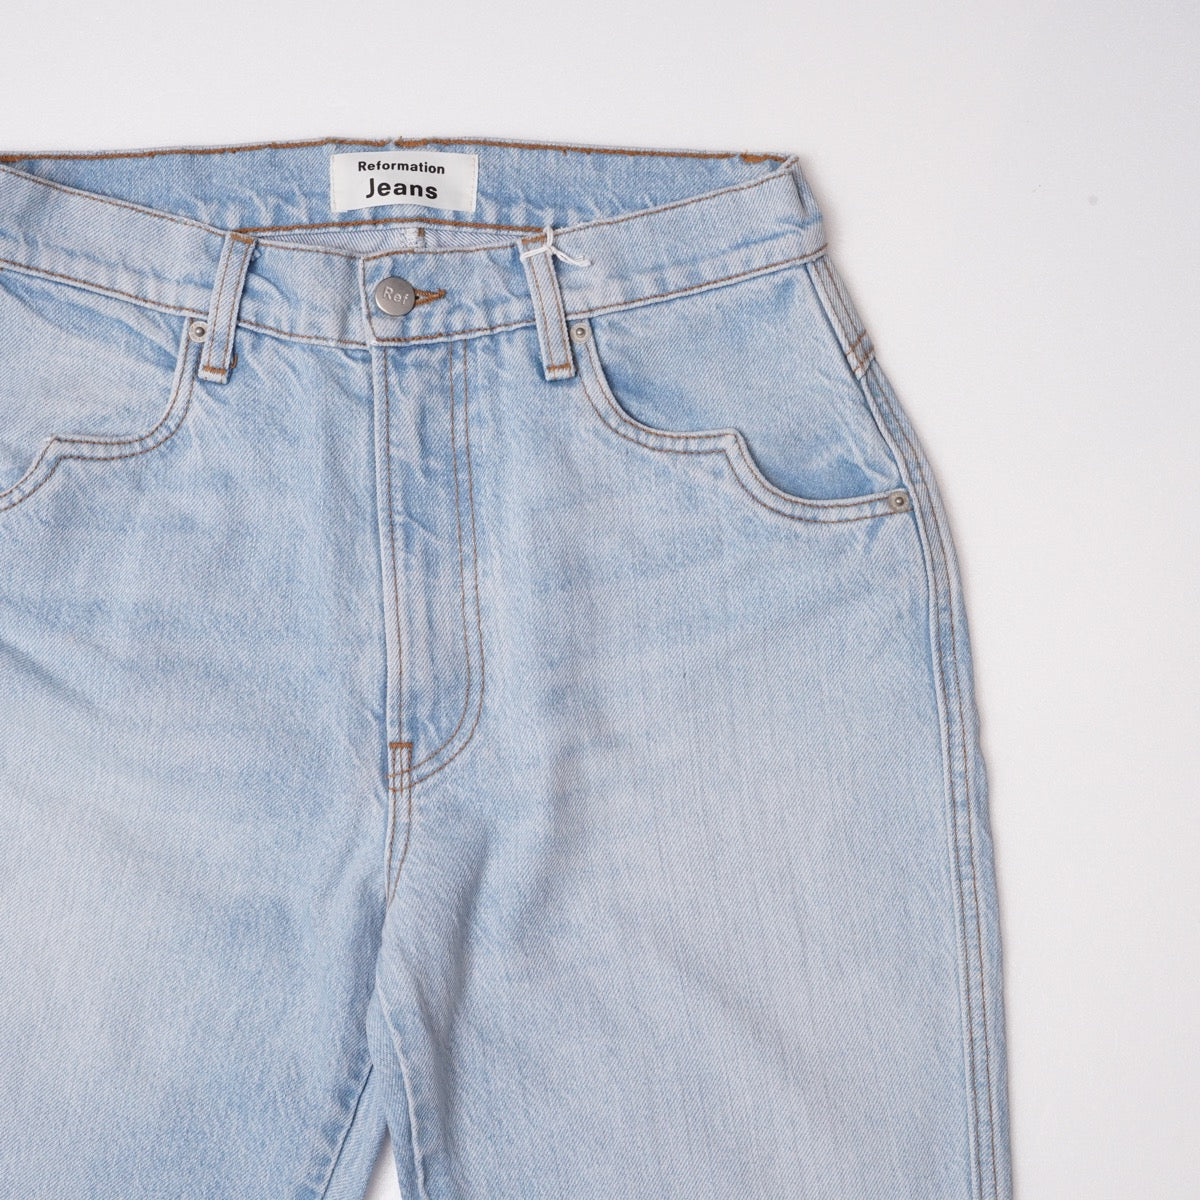 【WOMEN】New Brand〜Reformation〜Jeans